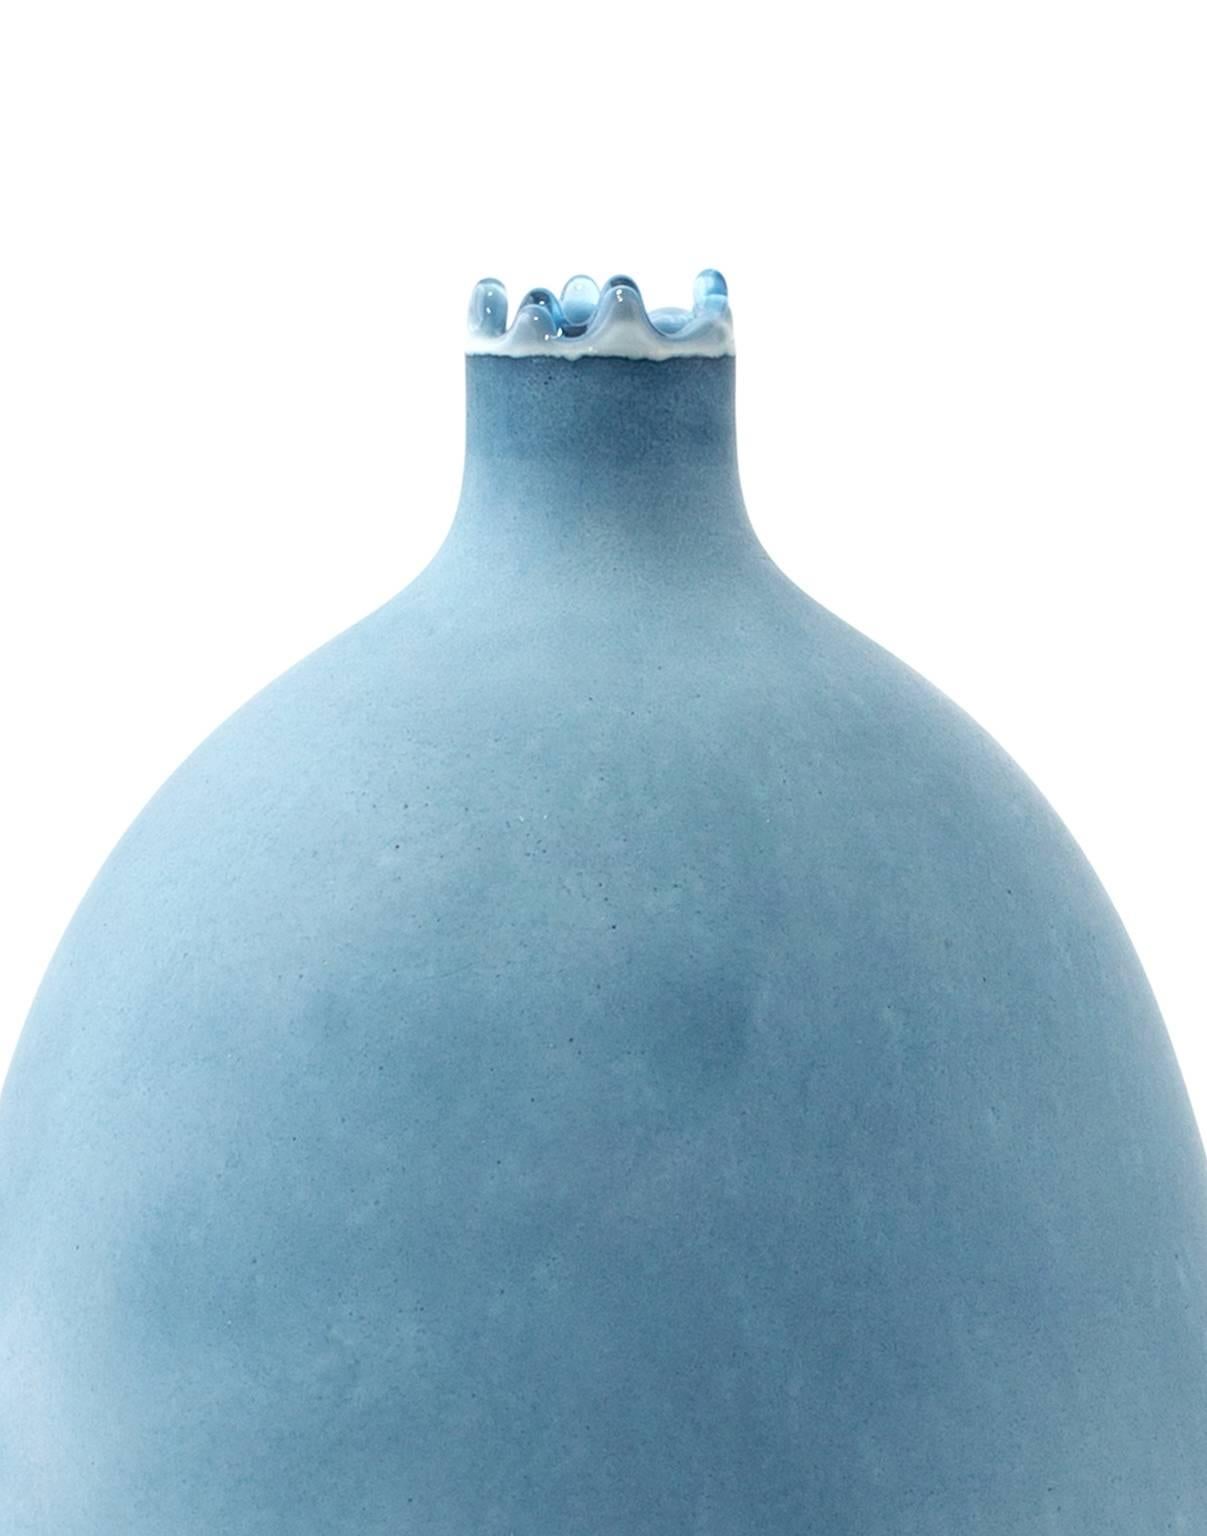 Organic Modern Unique Handmade 21st Century Blue and Indigo Dip-Dyed Oblong Vase